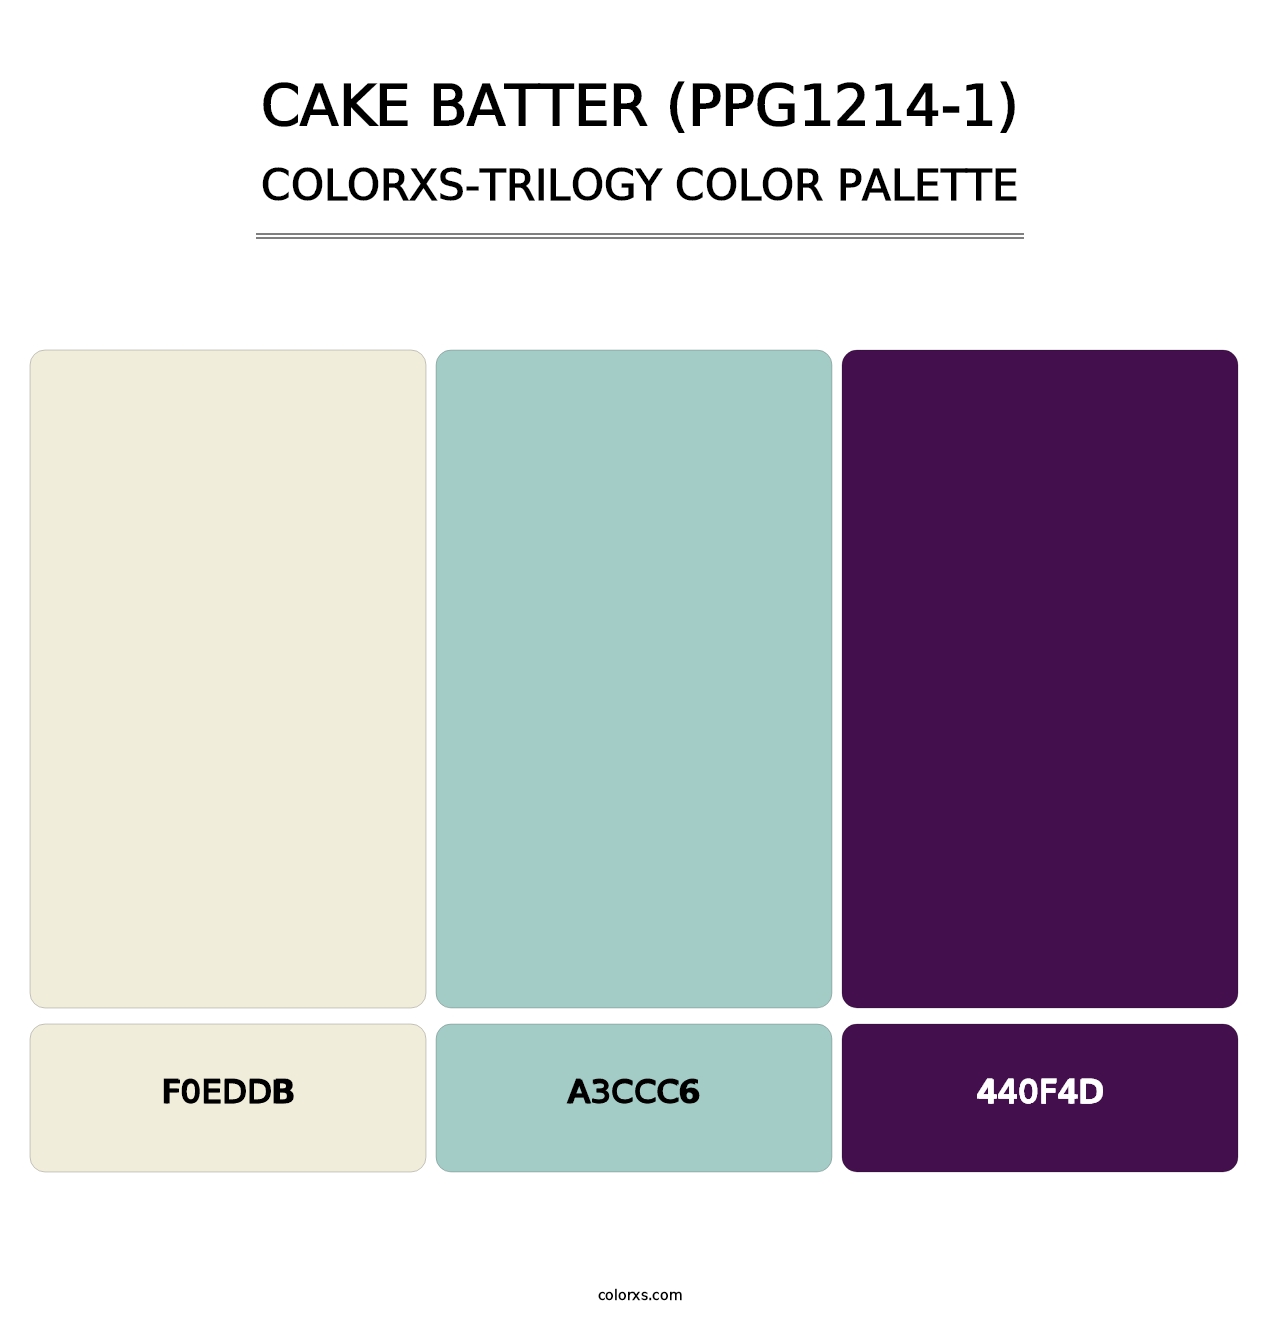 Cake Batter (PPG1214-1) - Colorxs Trilogy Palette